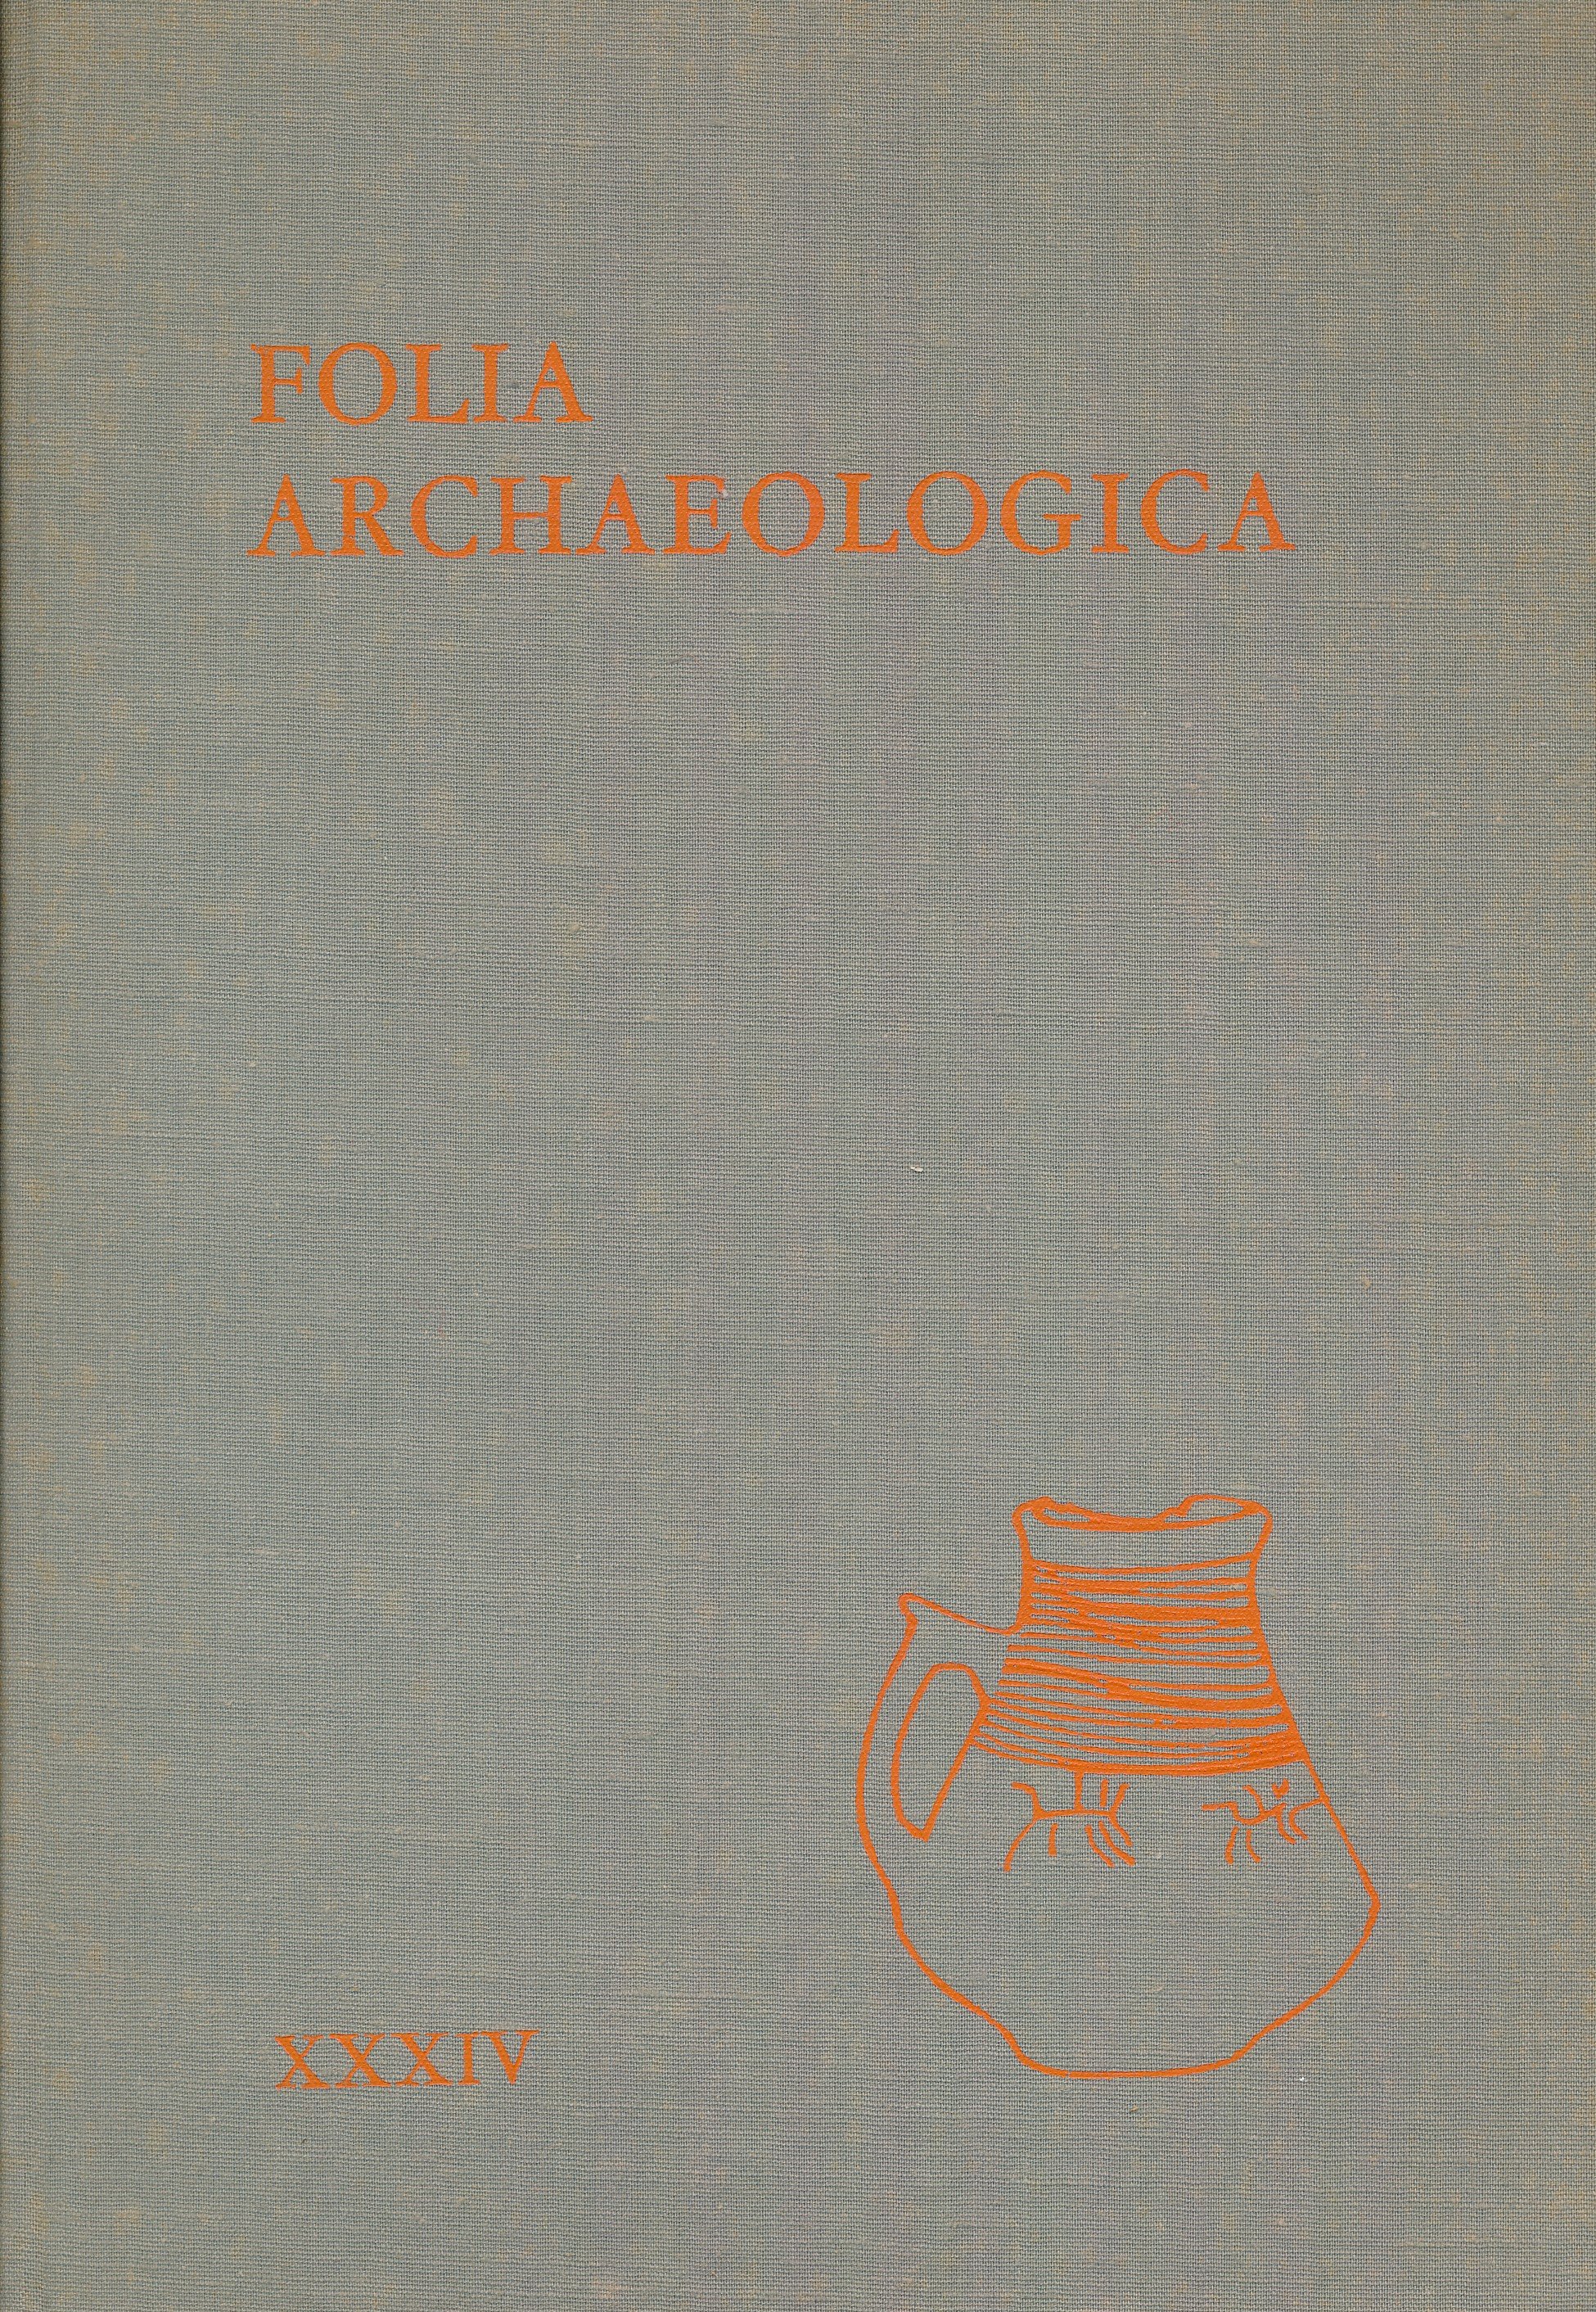 Folia archaeologica XXXIV. (Erkel Ferenc Területi Múzeum, Gyula CC BY-NC-SA)